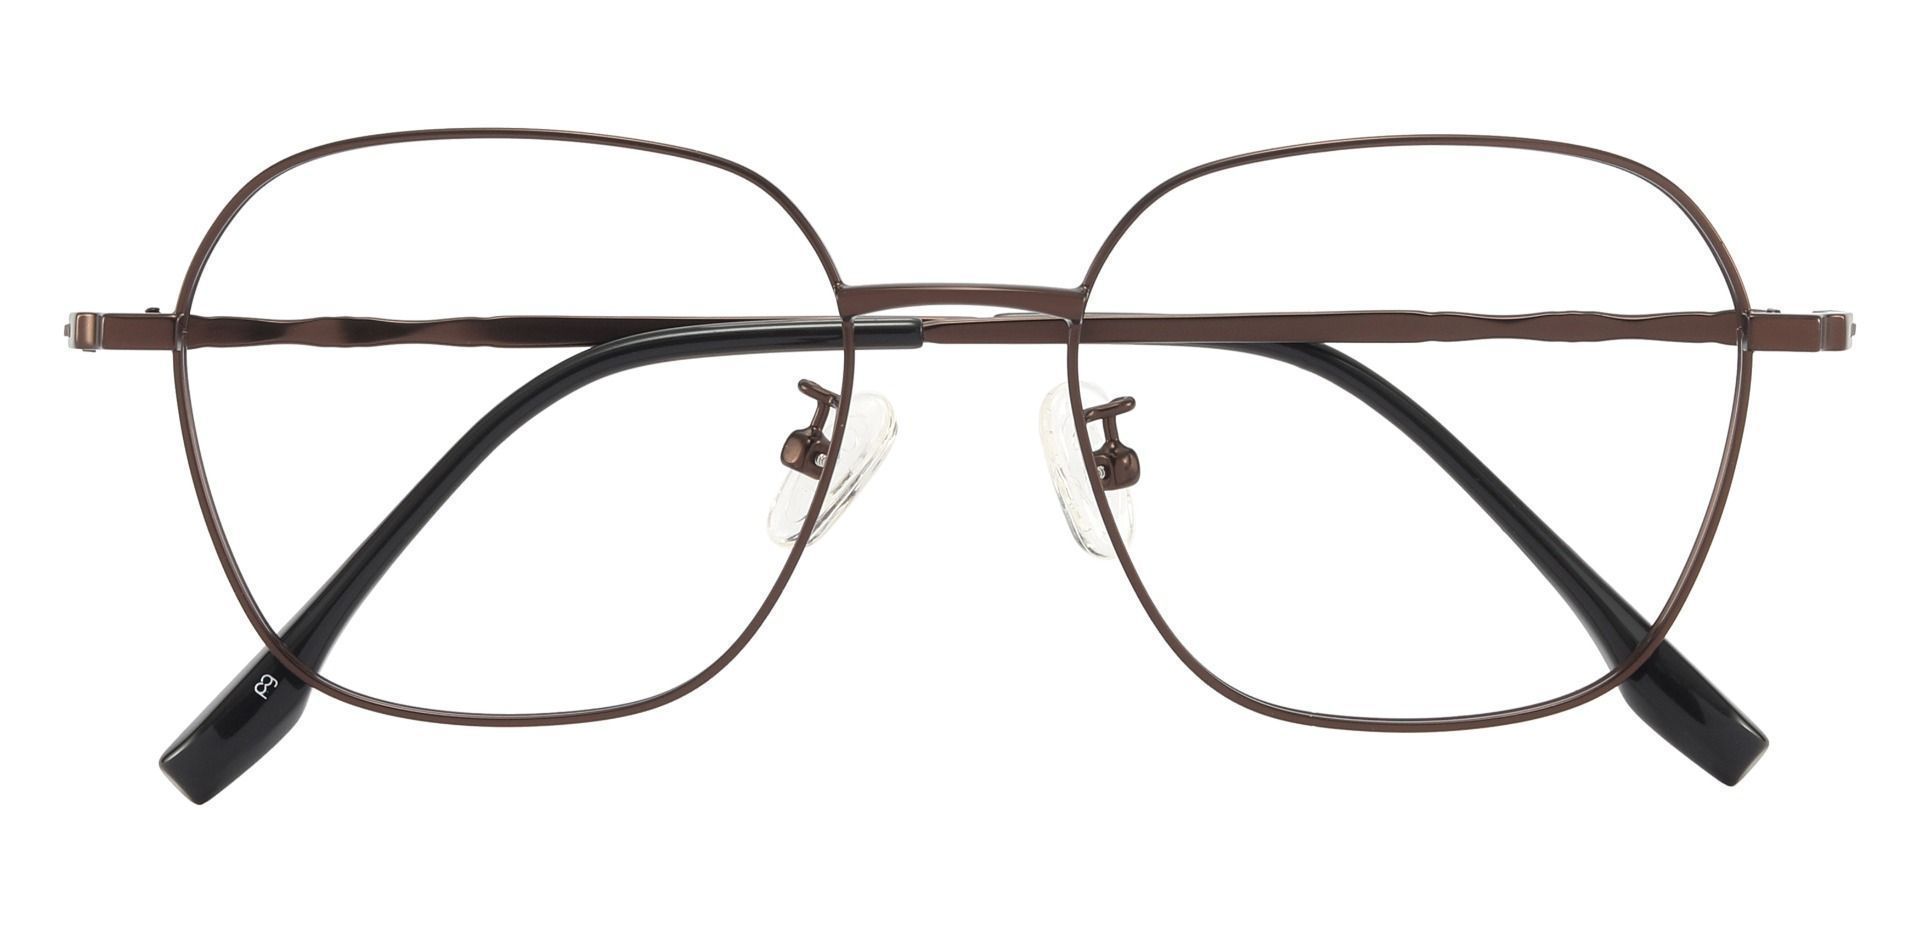 Crest Geometric Lined Bifocal Glasses - Brown